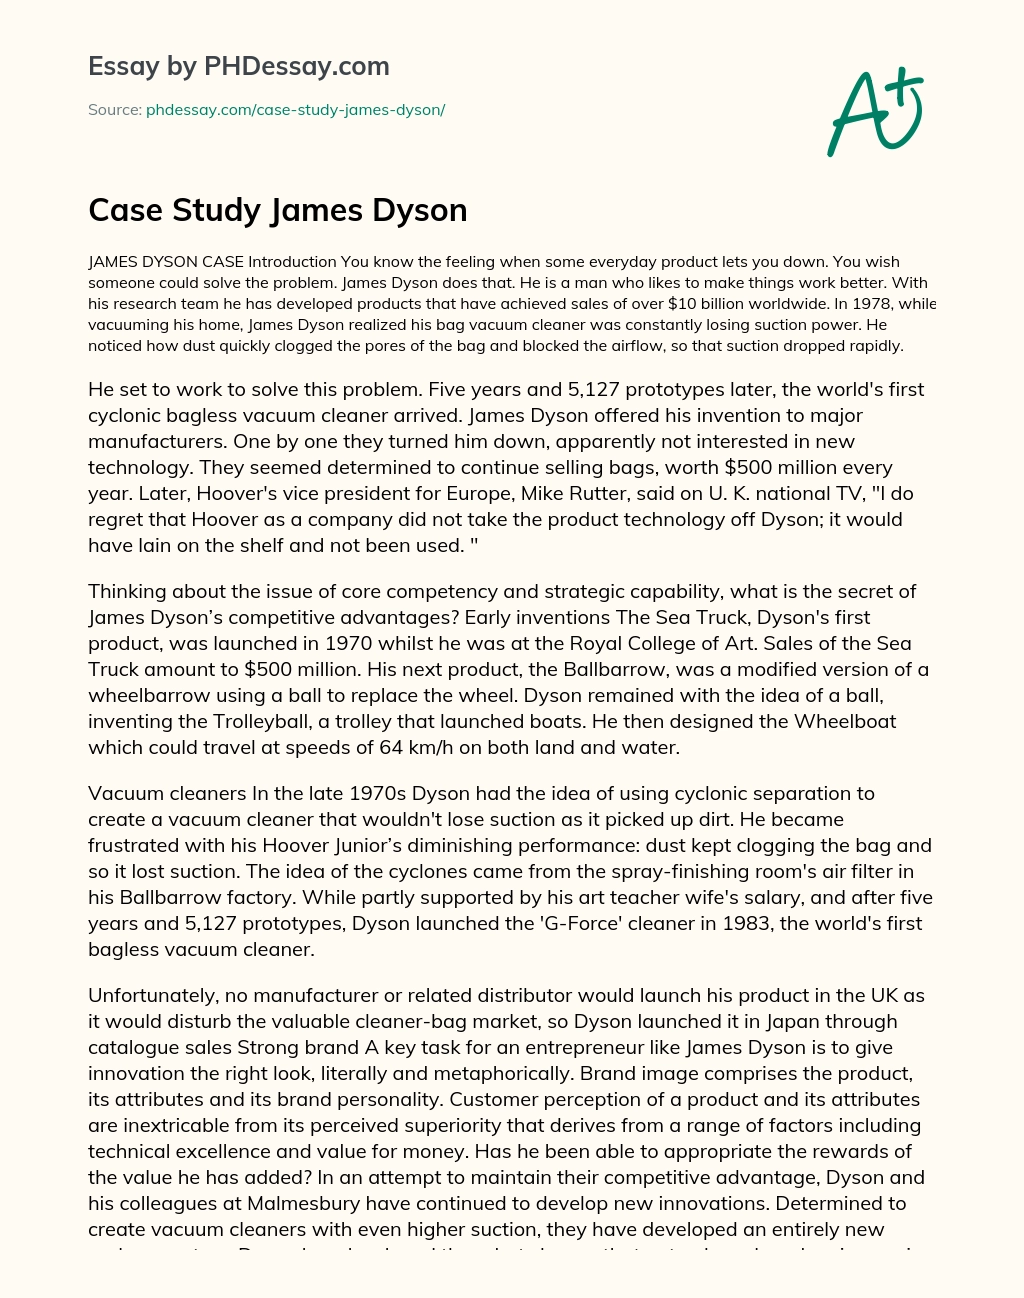 Case Study James Dyson essay